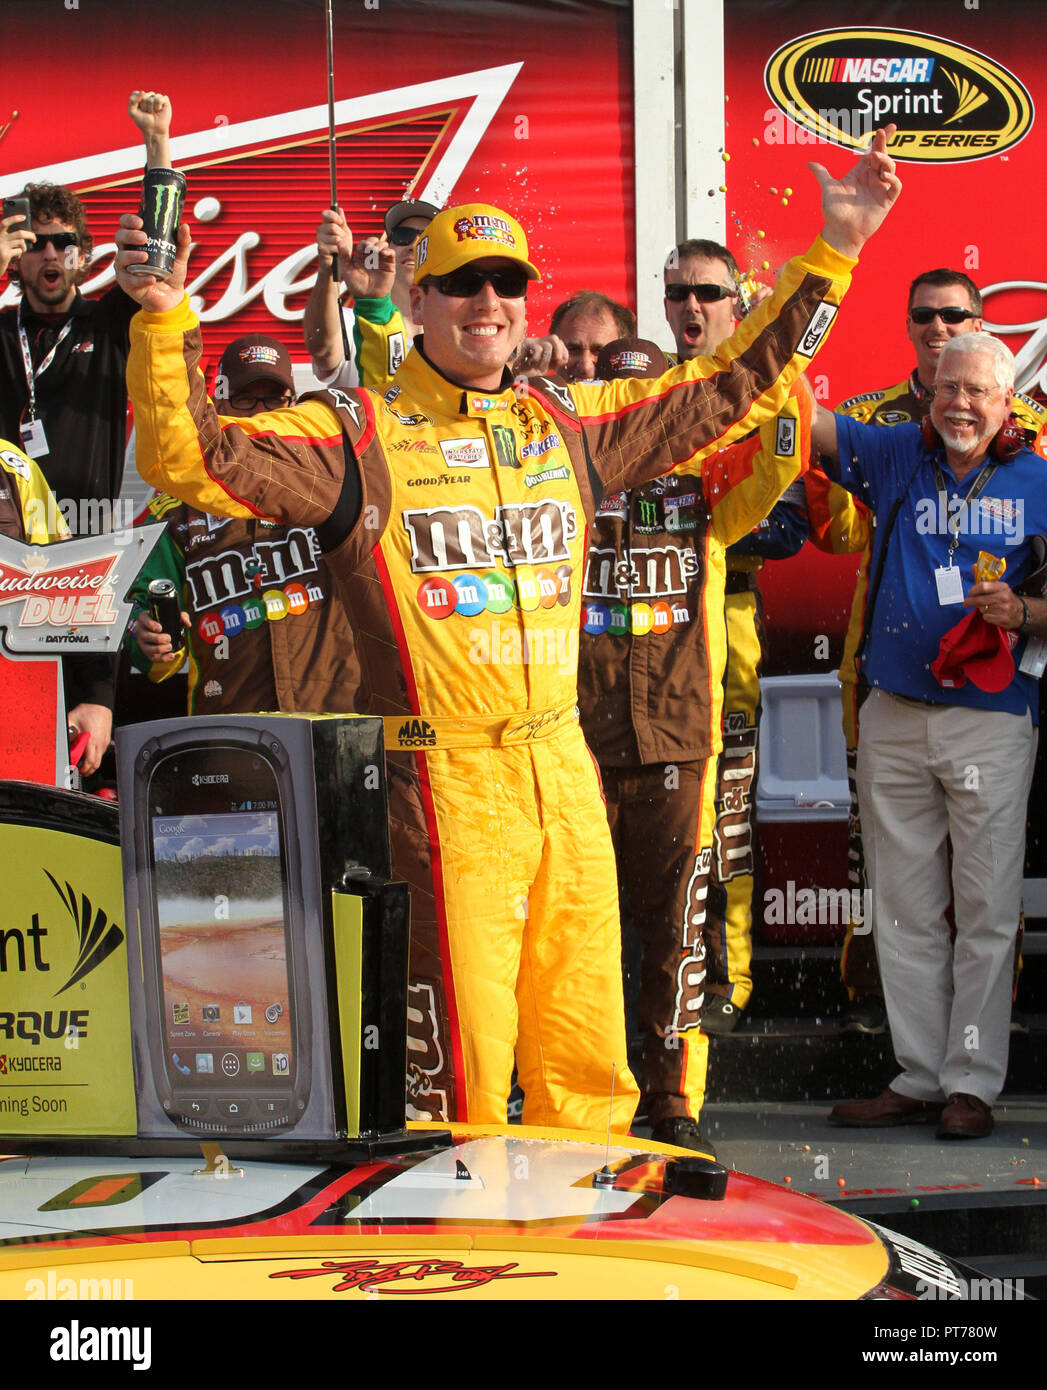 Kyle Busch festeggia conquistando la NASCAR Sprint Cup Budweiser duello #2, al Daytona International Speedway di Daytona, Florida il 21 febbraio 2013. Foto Stock